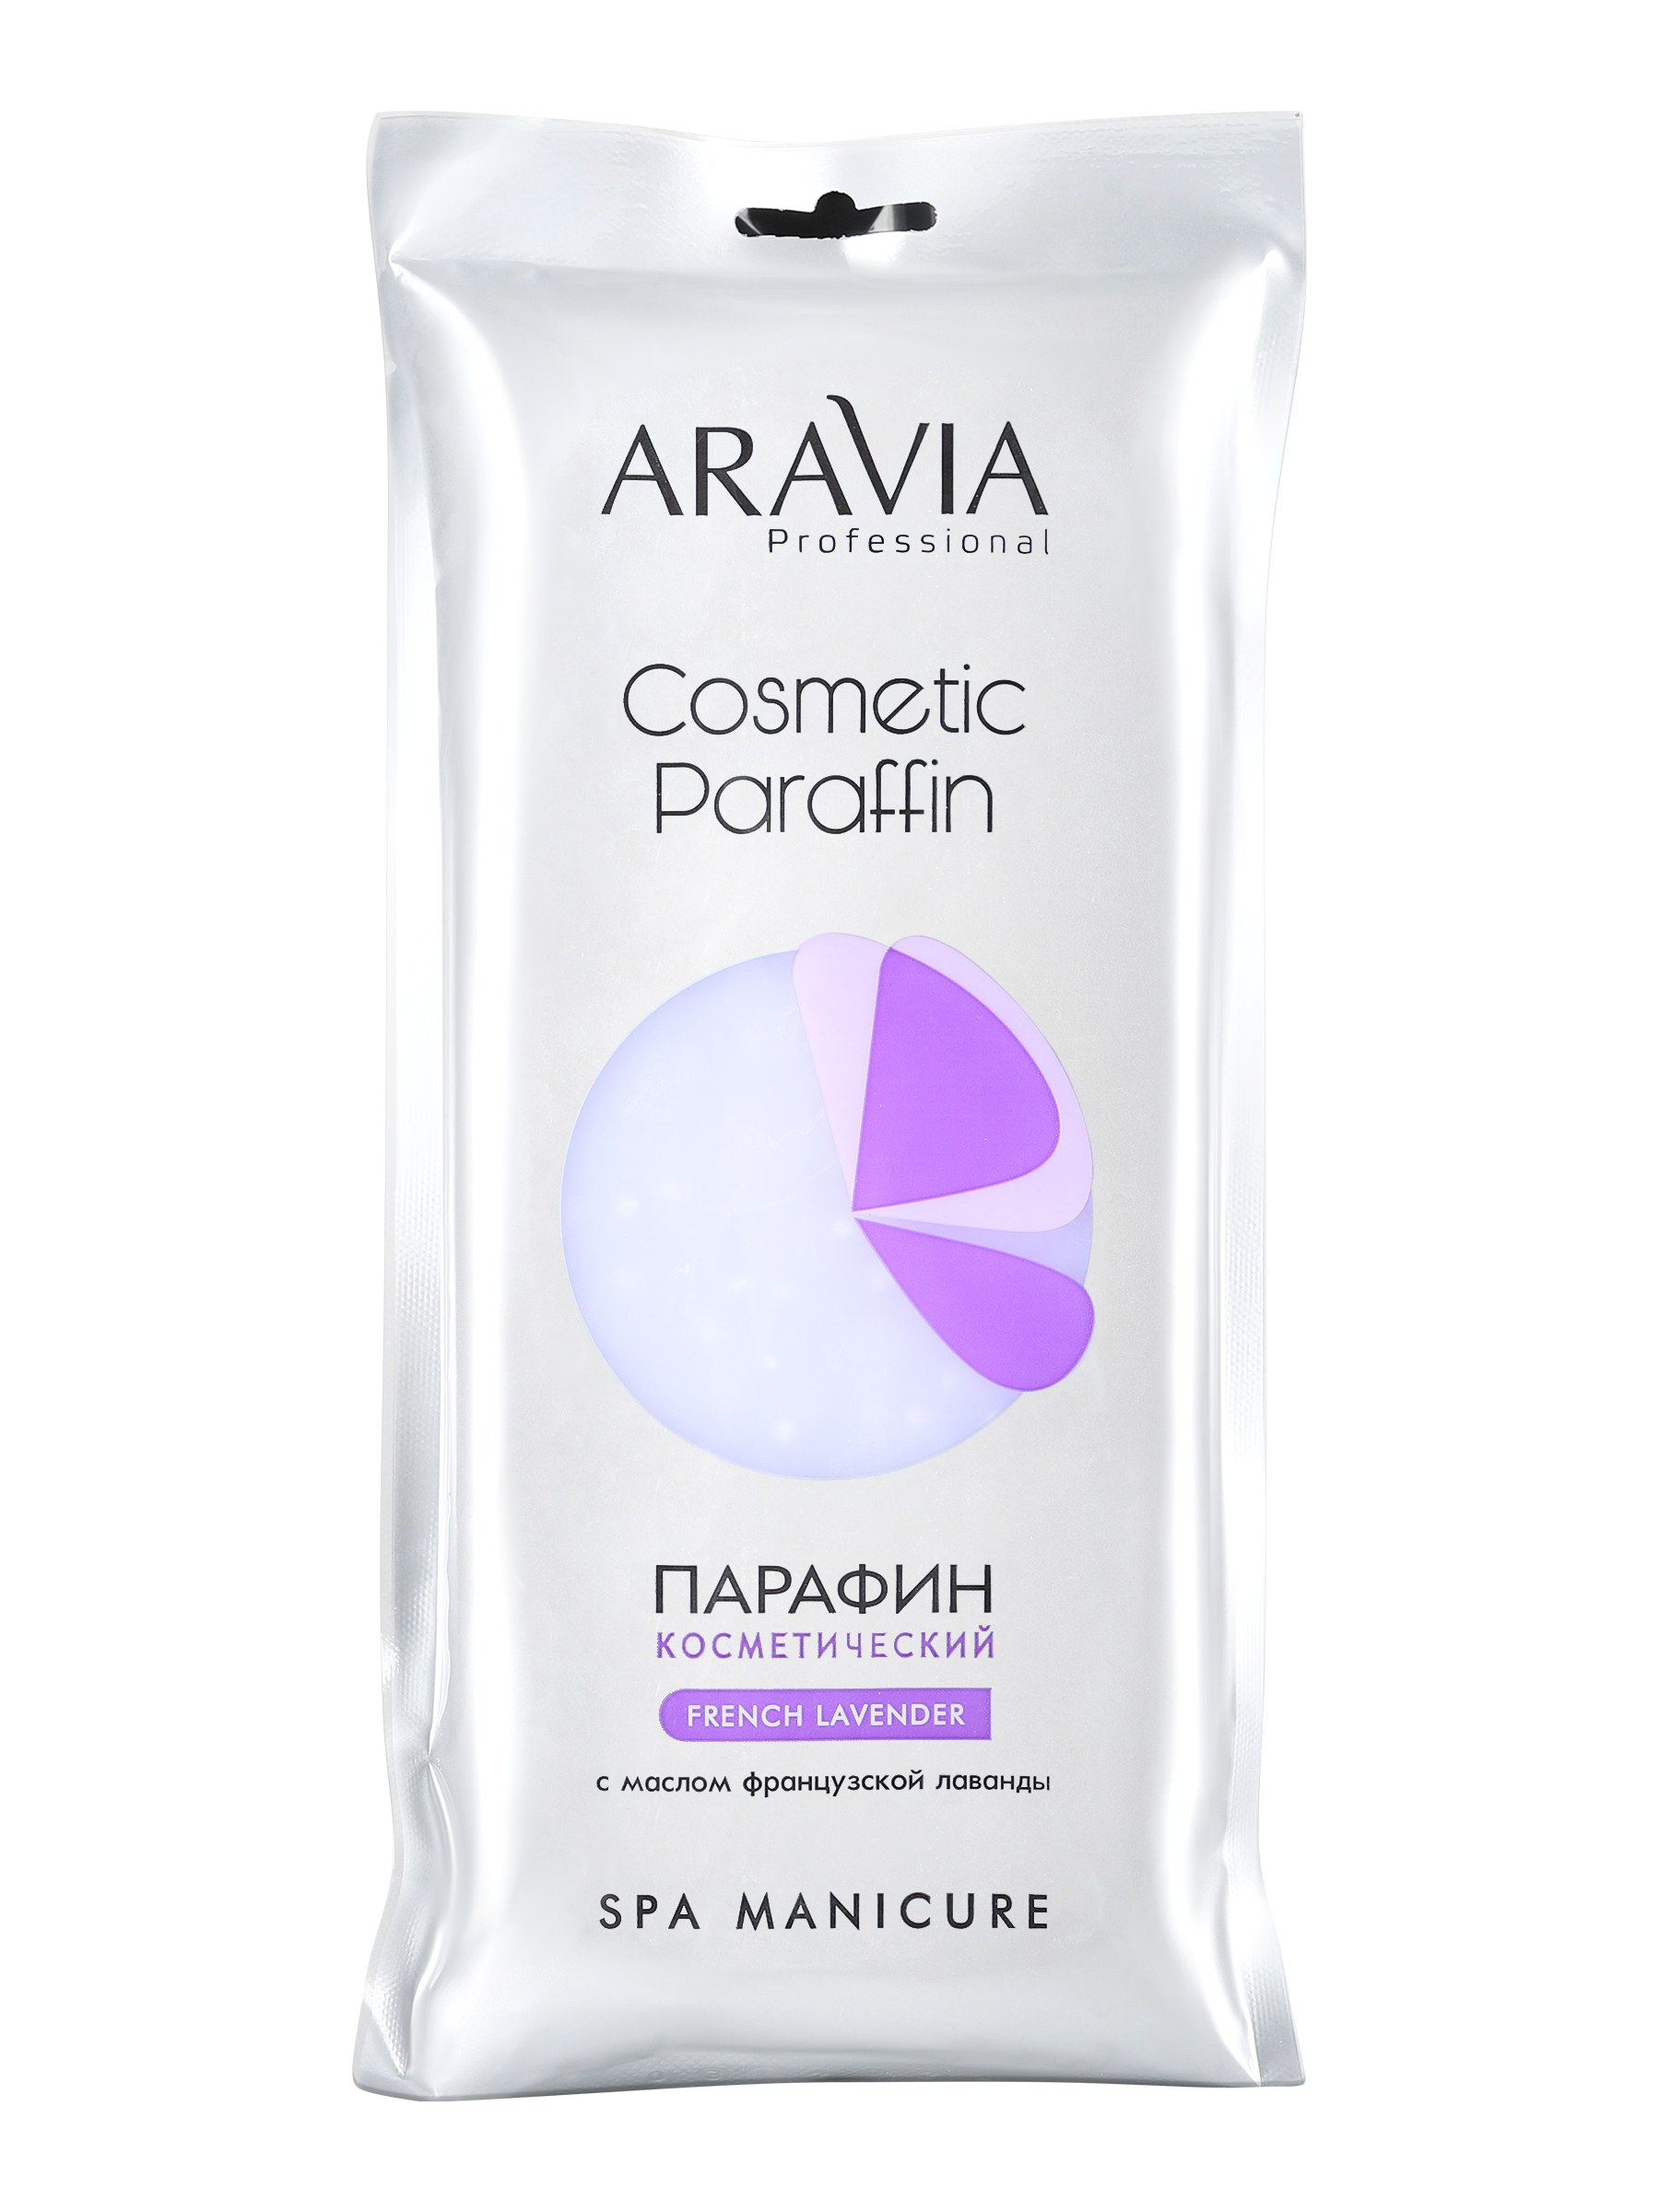 aravia парафин косметический с маслом лаванды французская лаванда 500 г Парафин косметический Aravia Professional French Lavender, 500 г